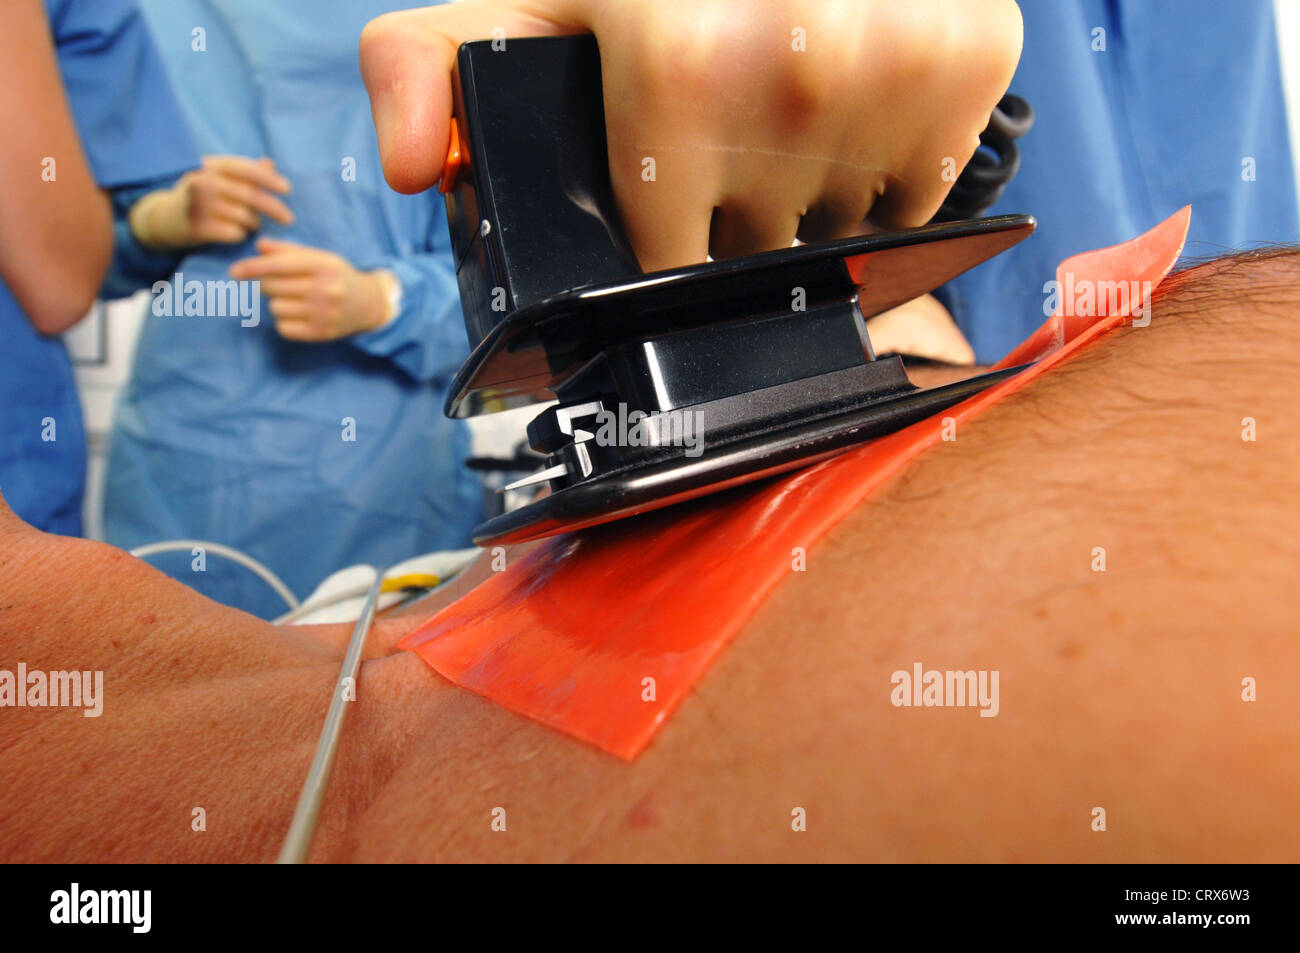 Doctors using a defibrillator to resuscitate a male heart attack victim. Stock Photo